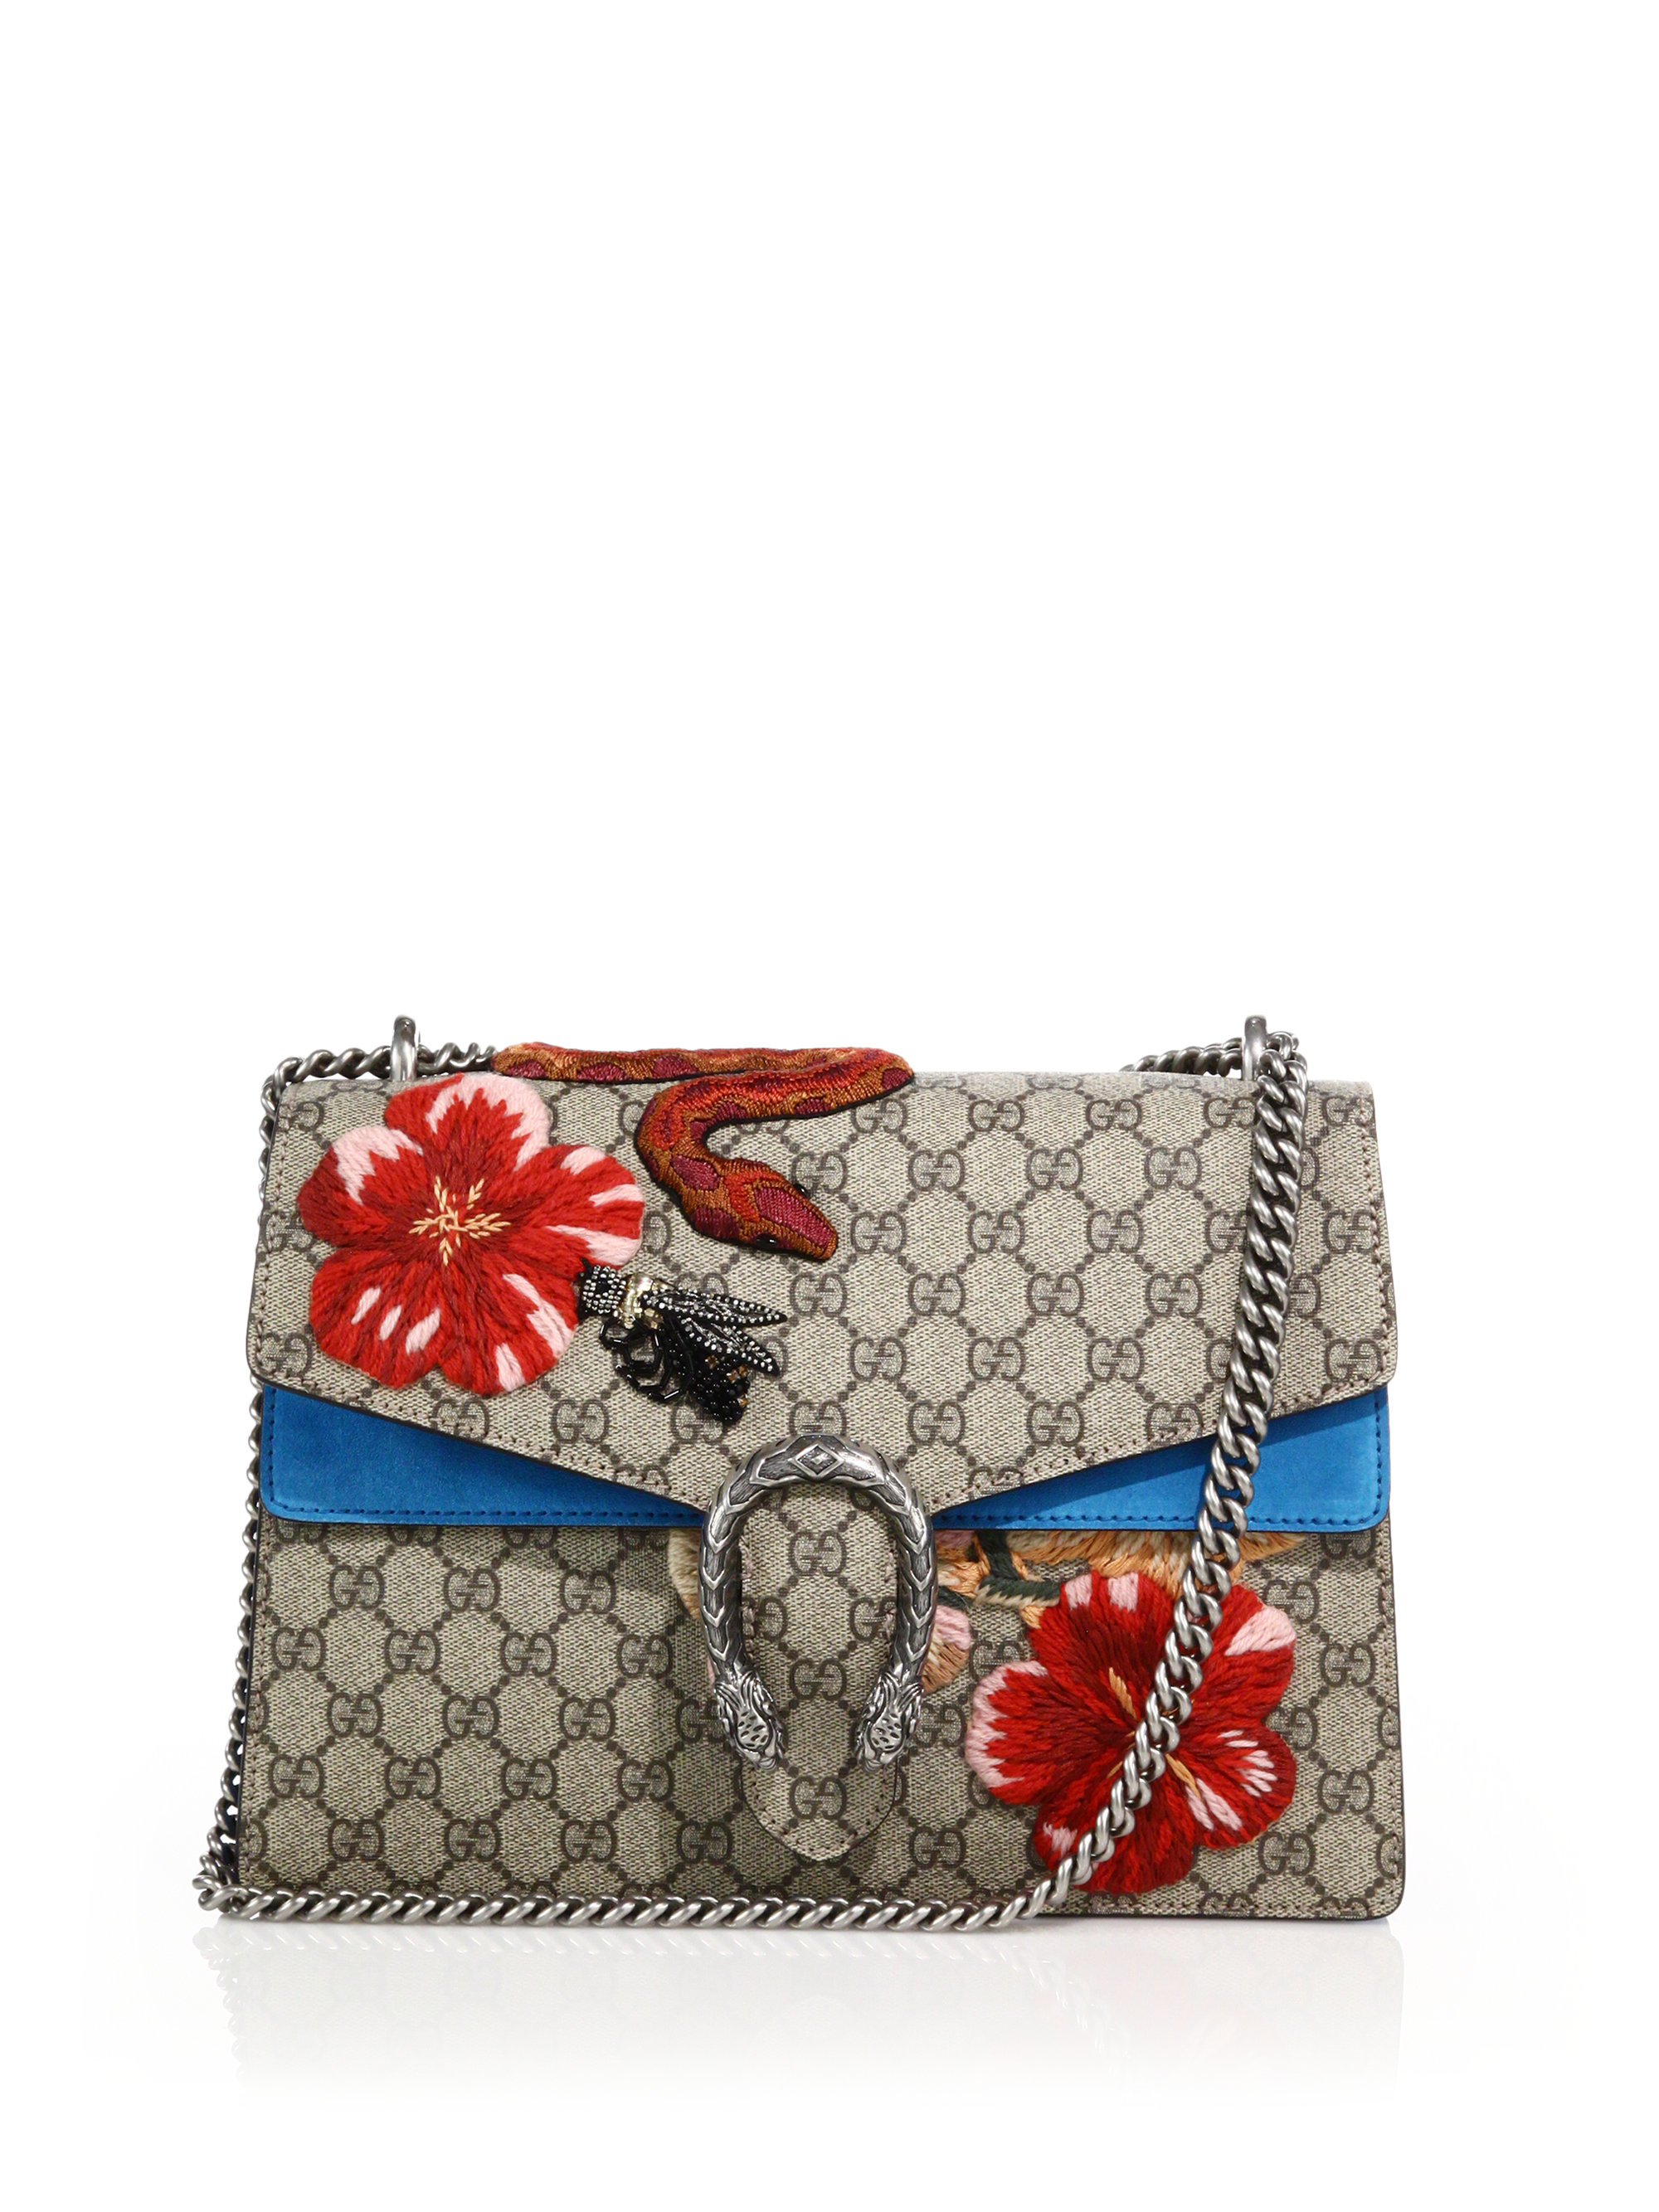 Lyst - Gucci Dionysus Gg Supreme Canvas Embroidered Shoulder Bag